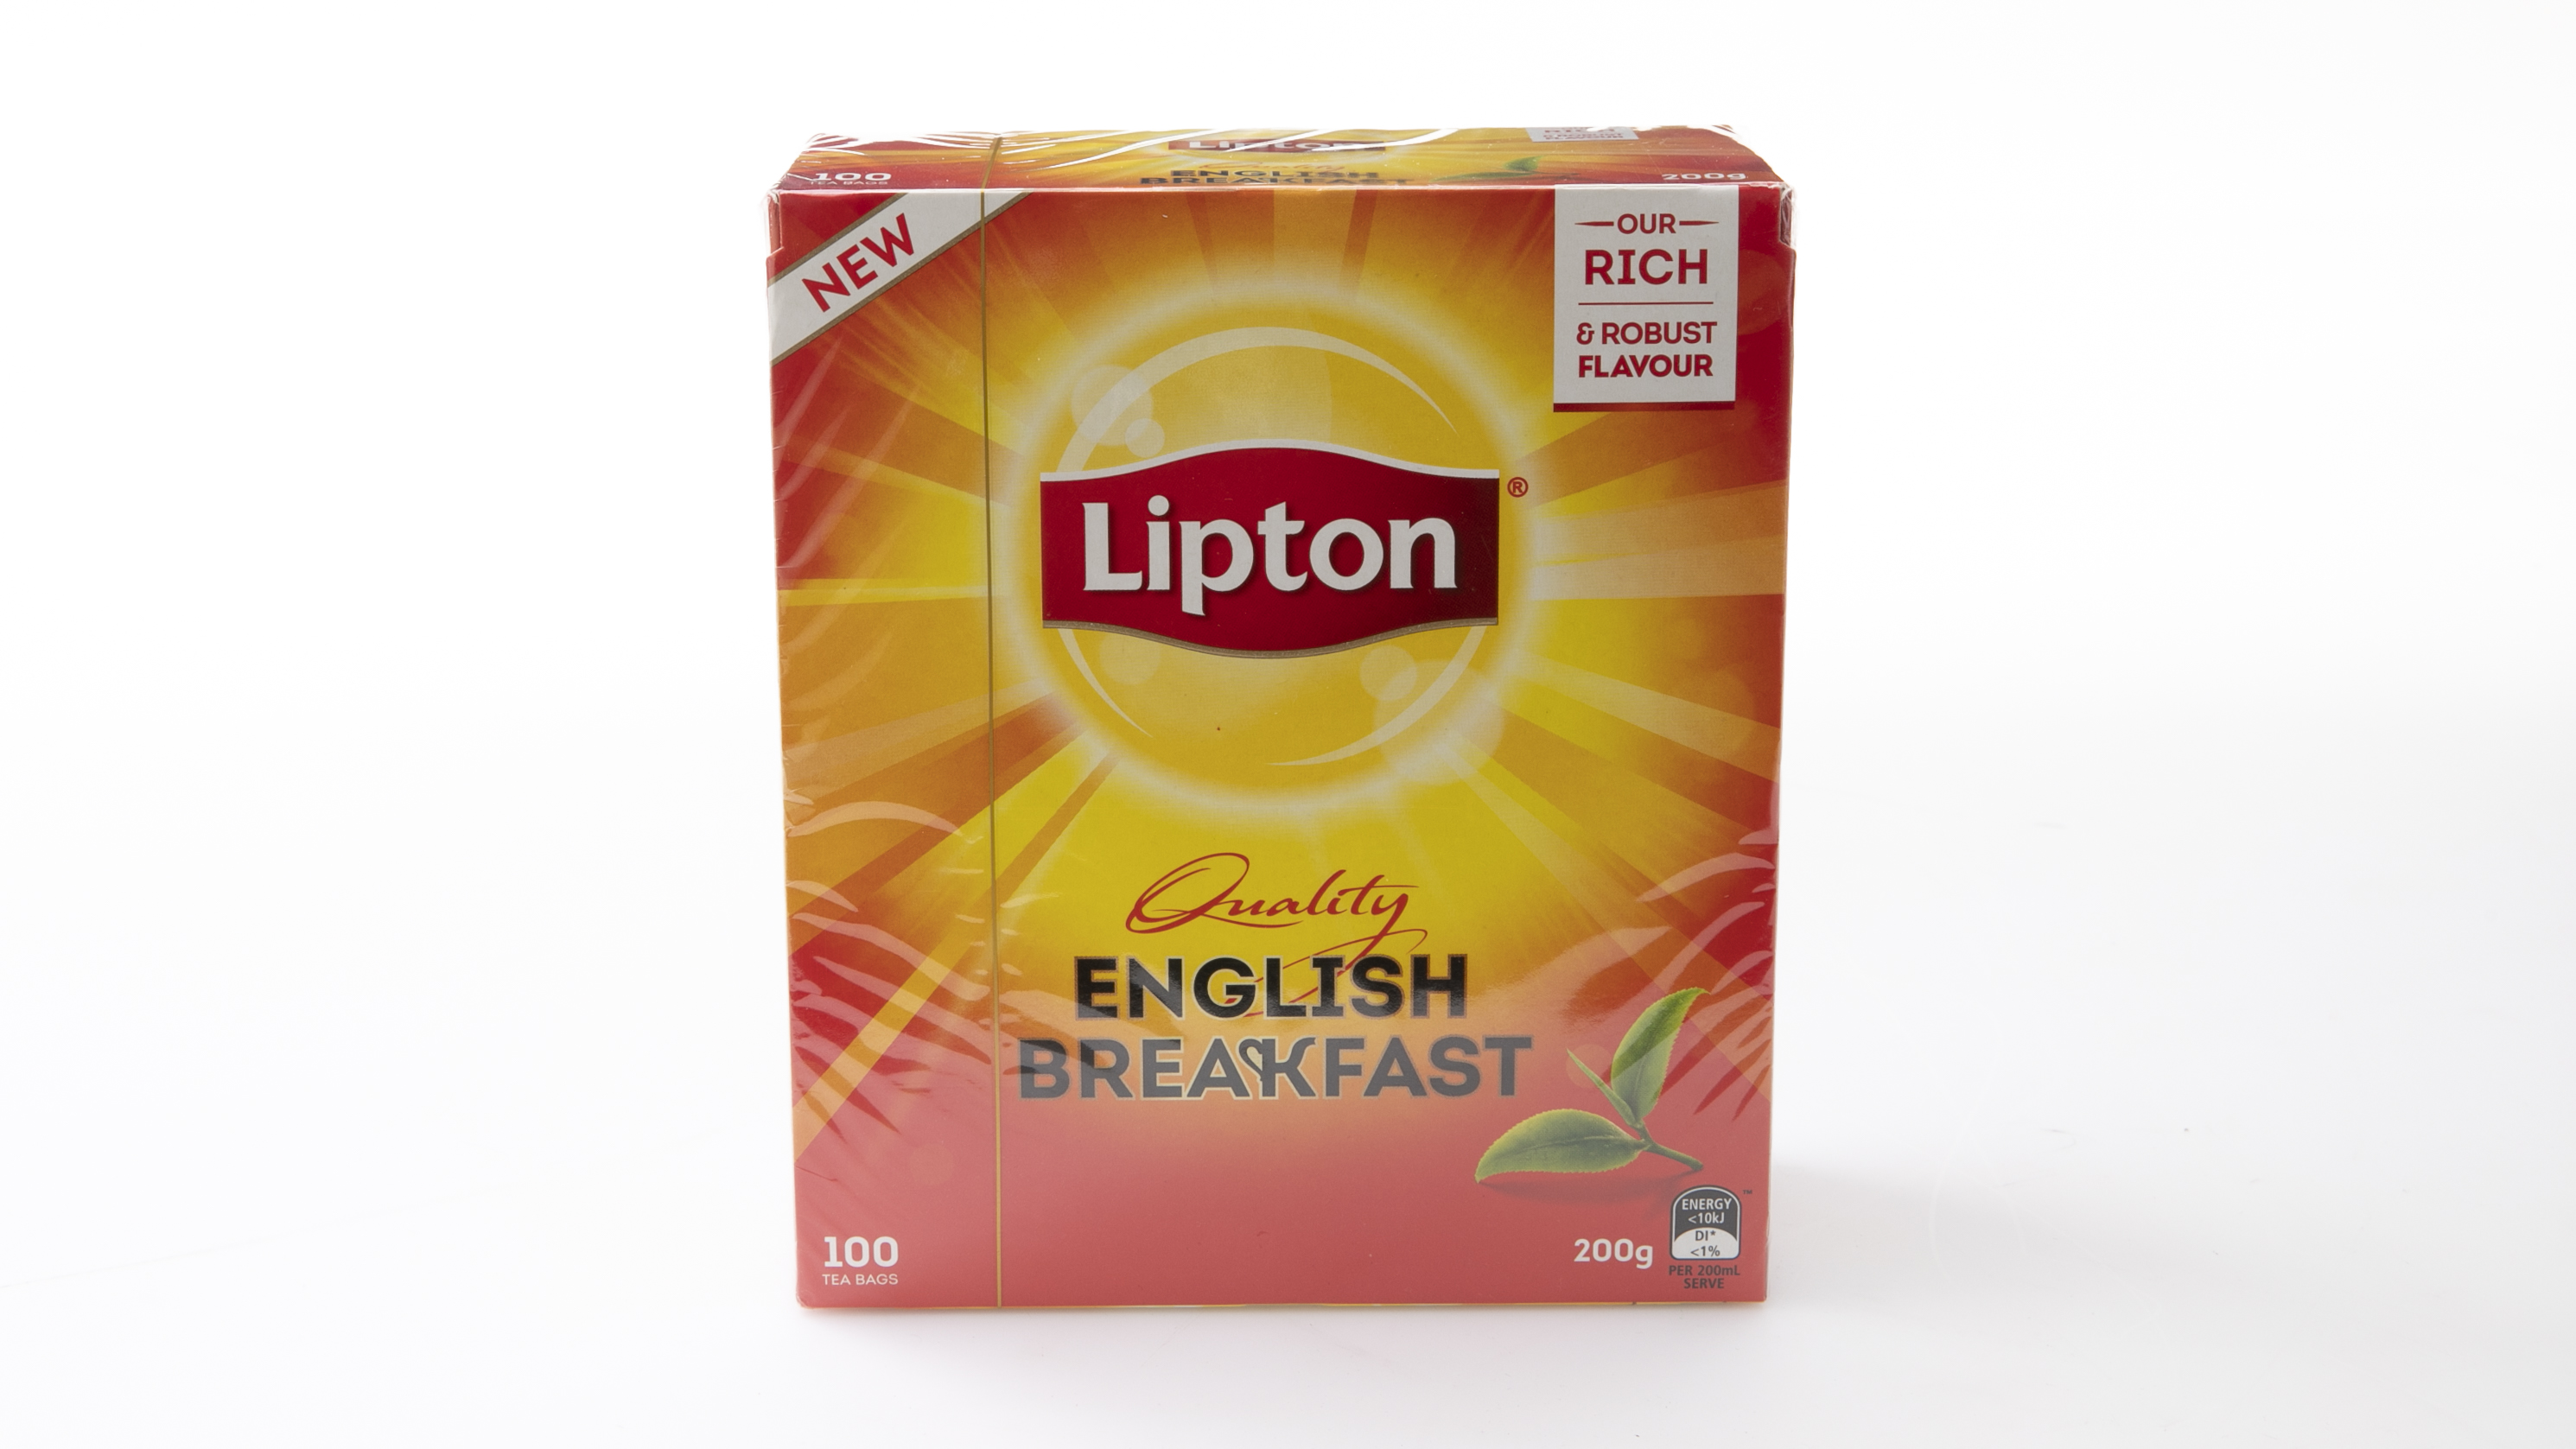 Buy Bushells Australian Breakfast Tea Bags 100 pack Online